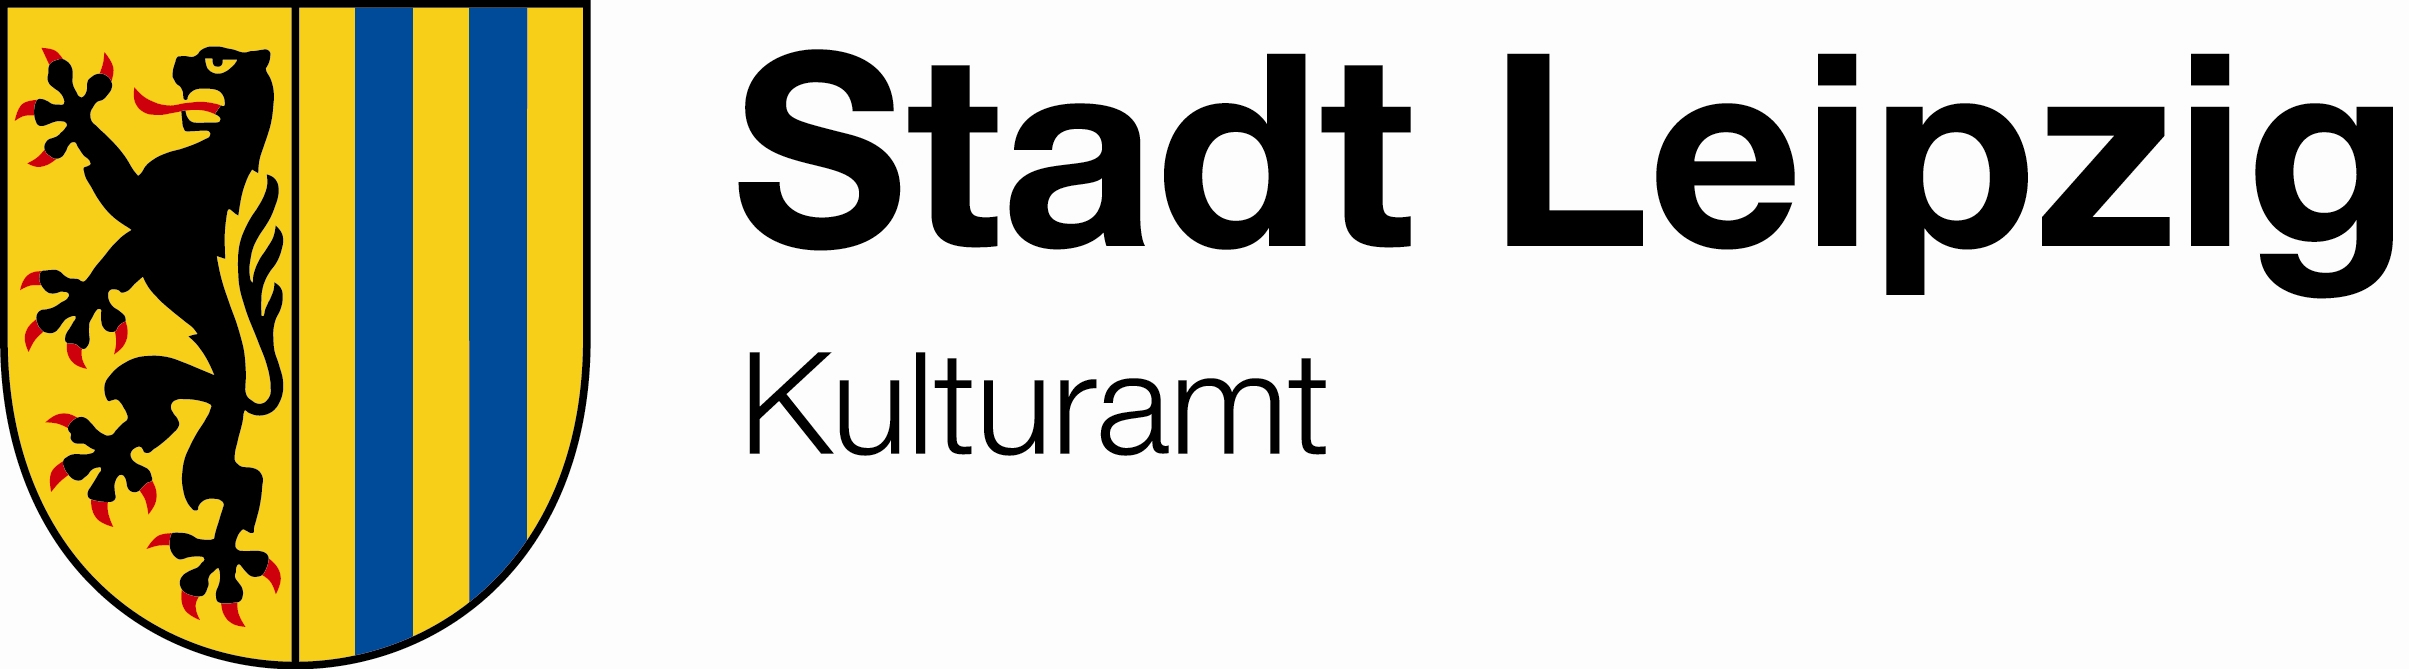 logo_stadt-leipzig-kulturamt_Wa-l-4c